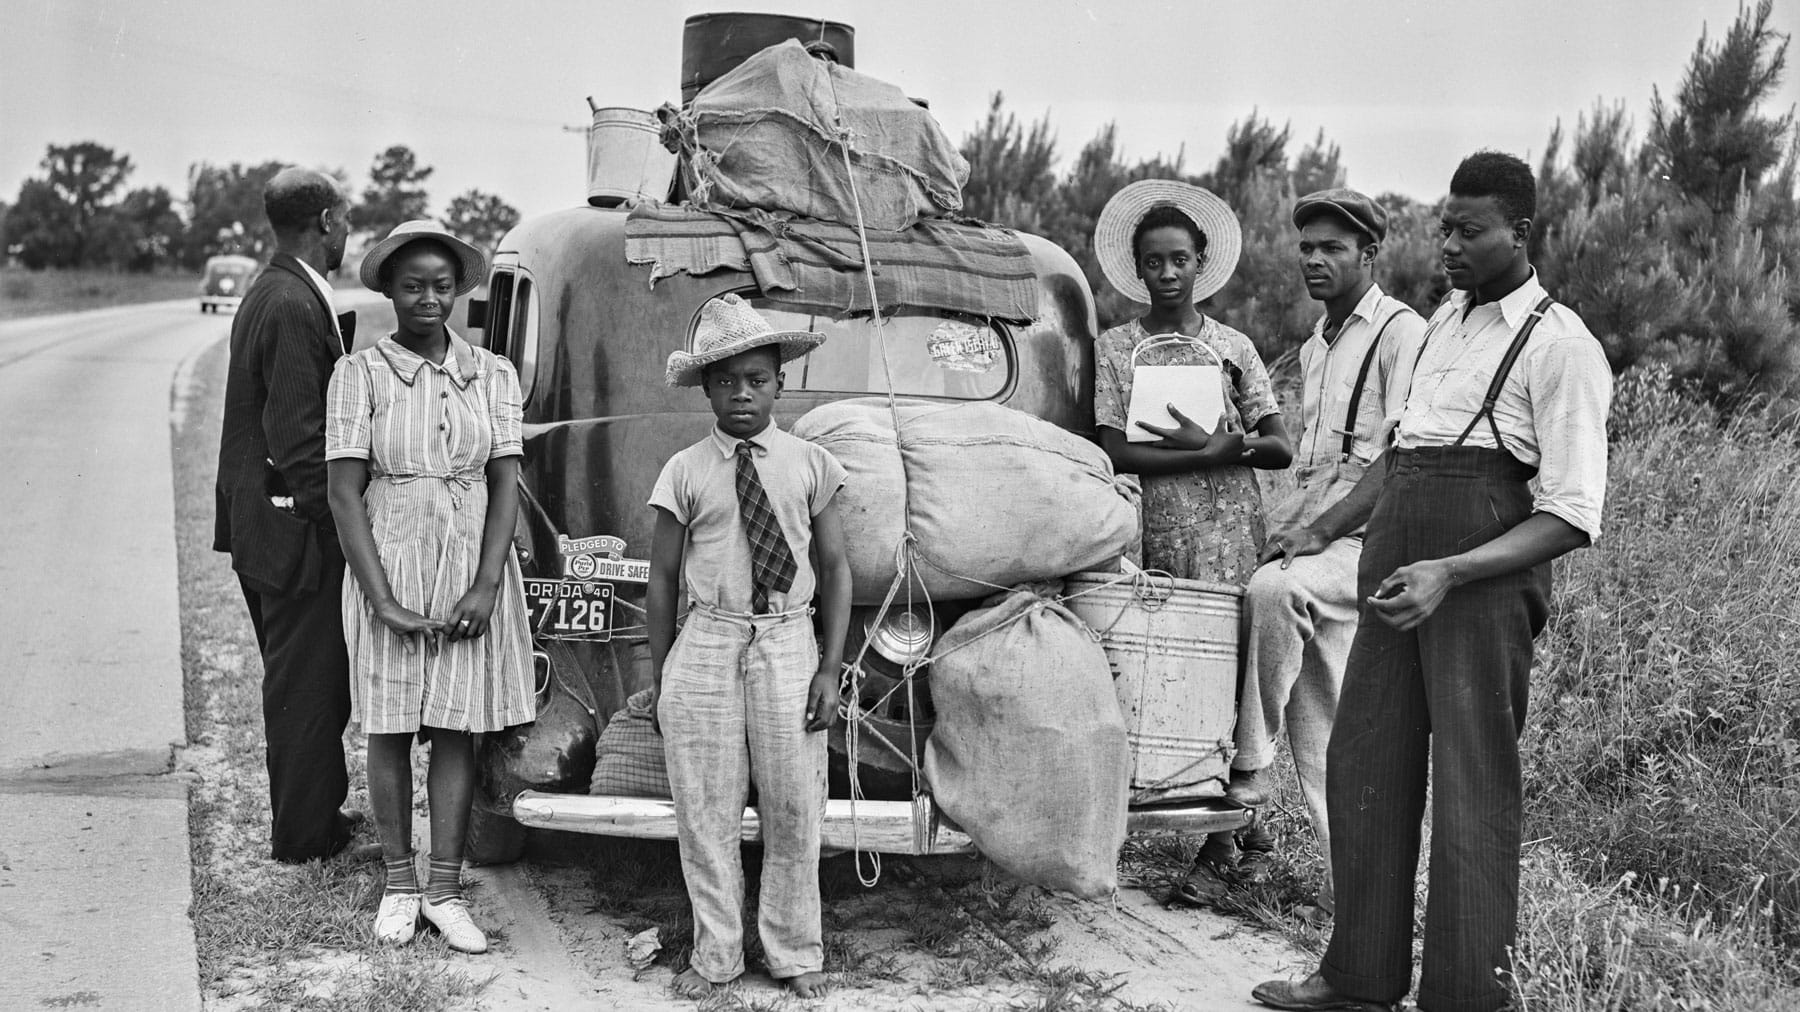 A Black migrant family in 1930